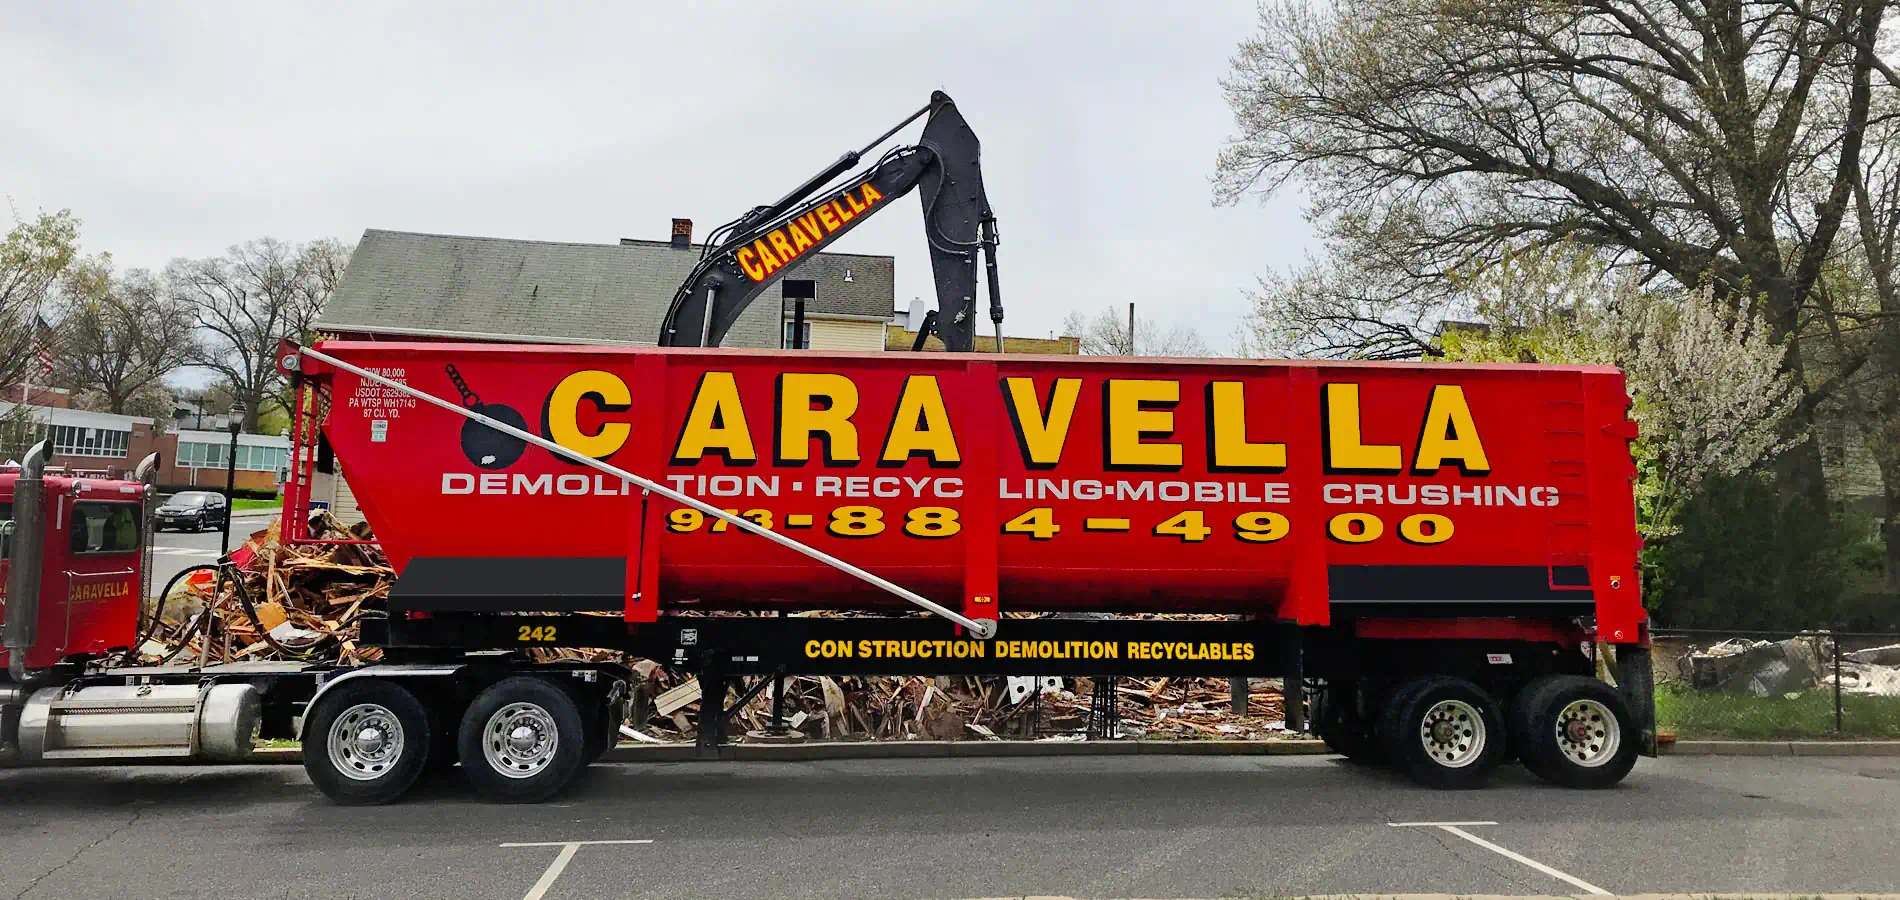 Demolition Services in Montclair, NJ | Caravella Demolition